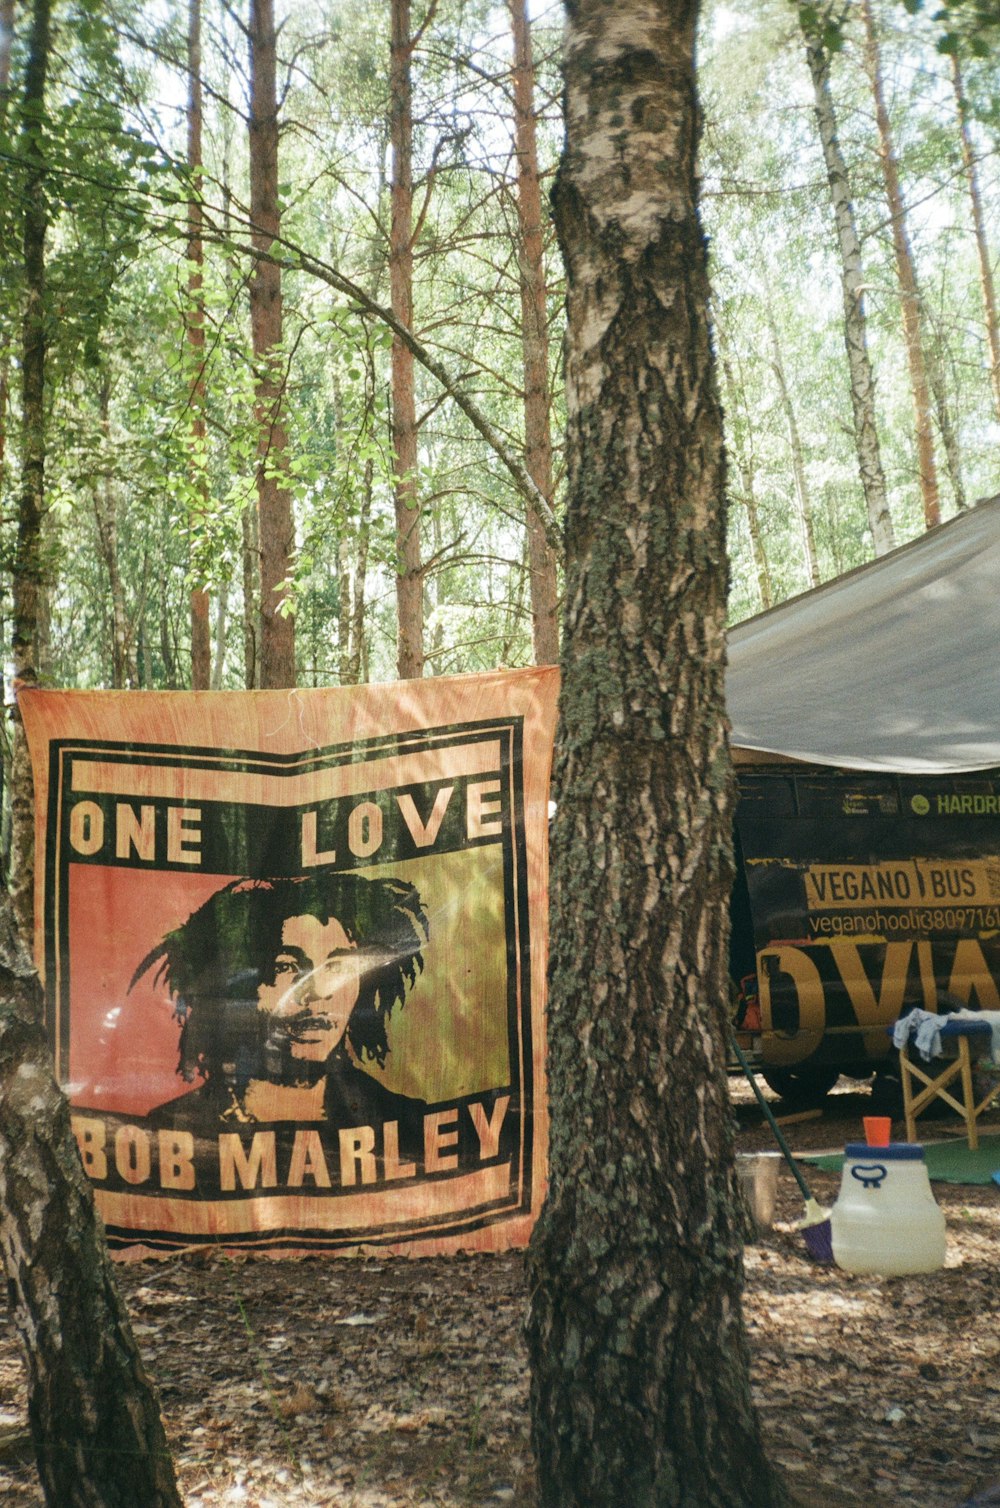 One Love Bob Marley poster